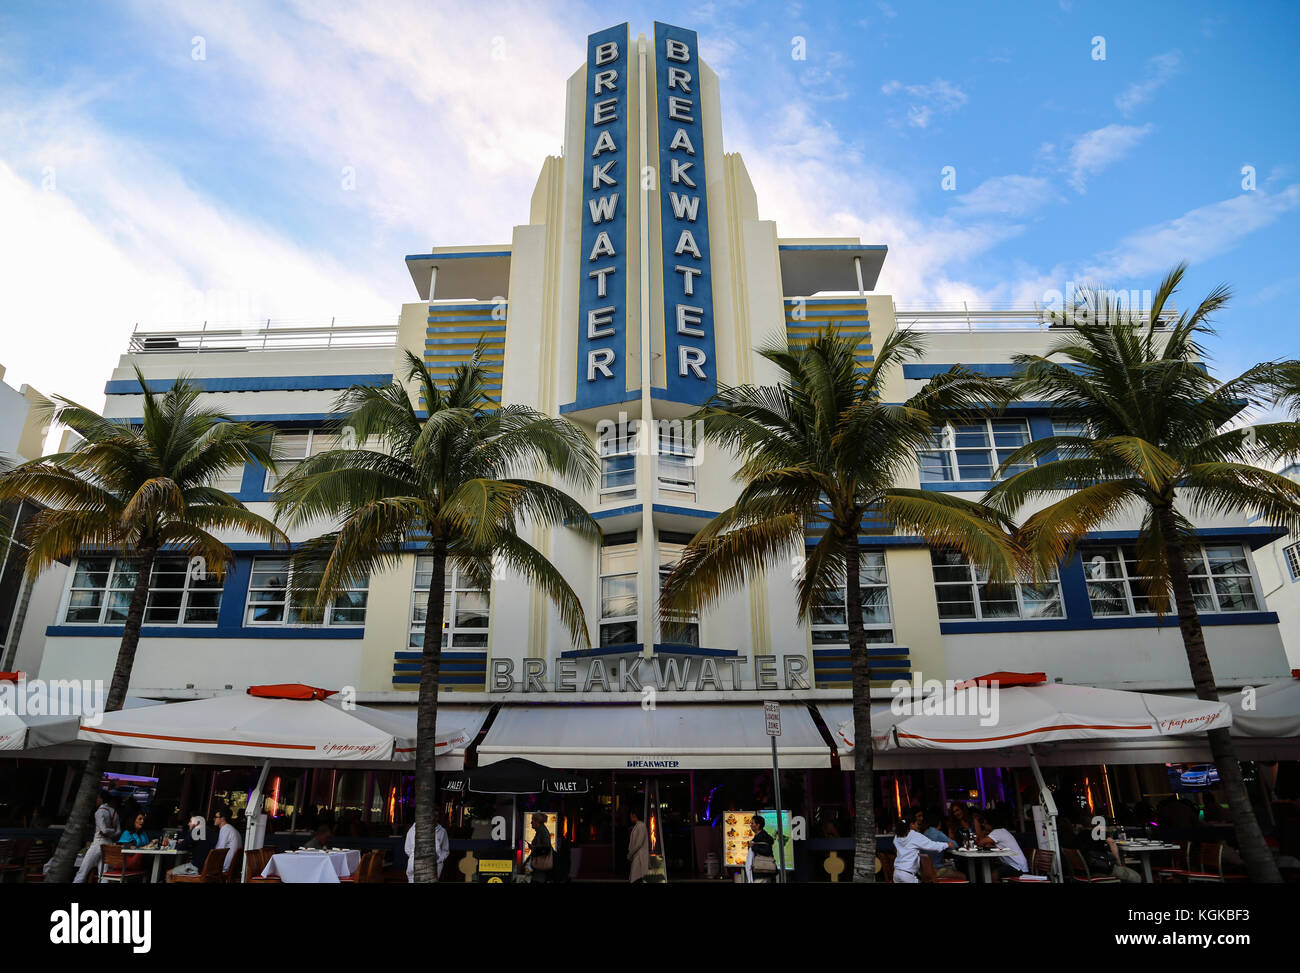 The Breakwater Hotel, a cool Art Deco building on Ocean Drive in South Beach, Miami Beach, Miami, Florida, USA. Stock Photo